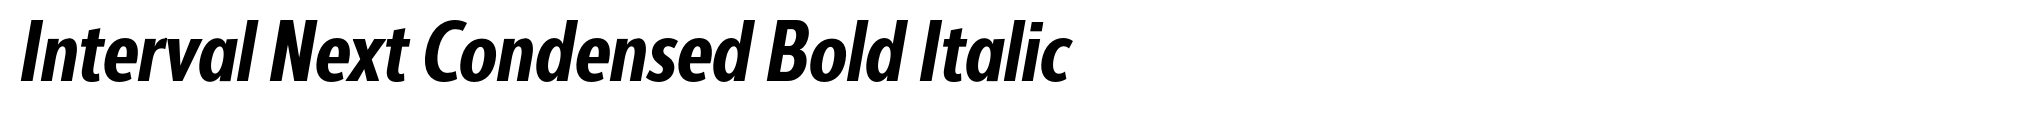 Interval Next Condensed Bold Italic image